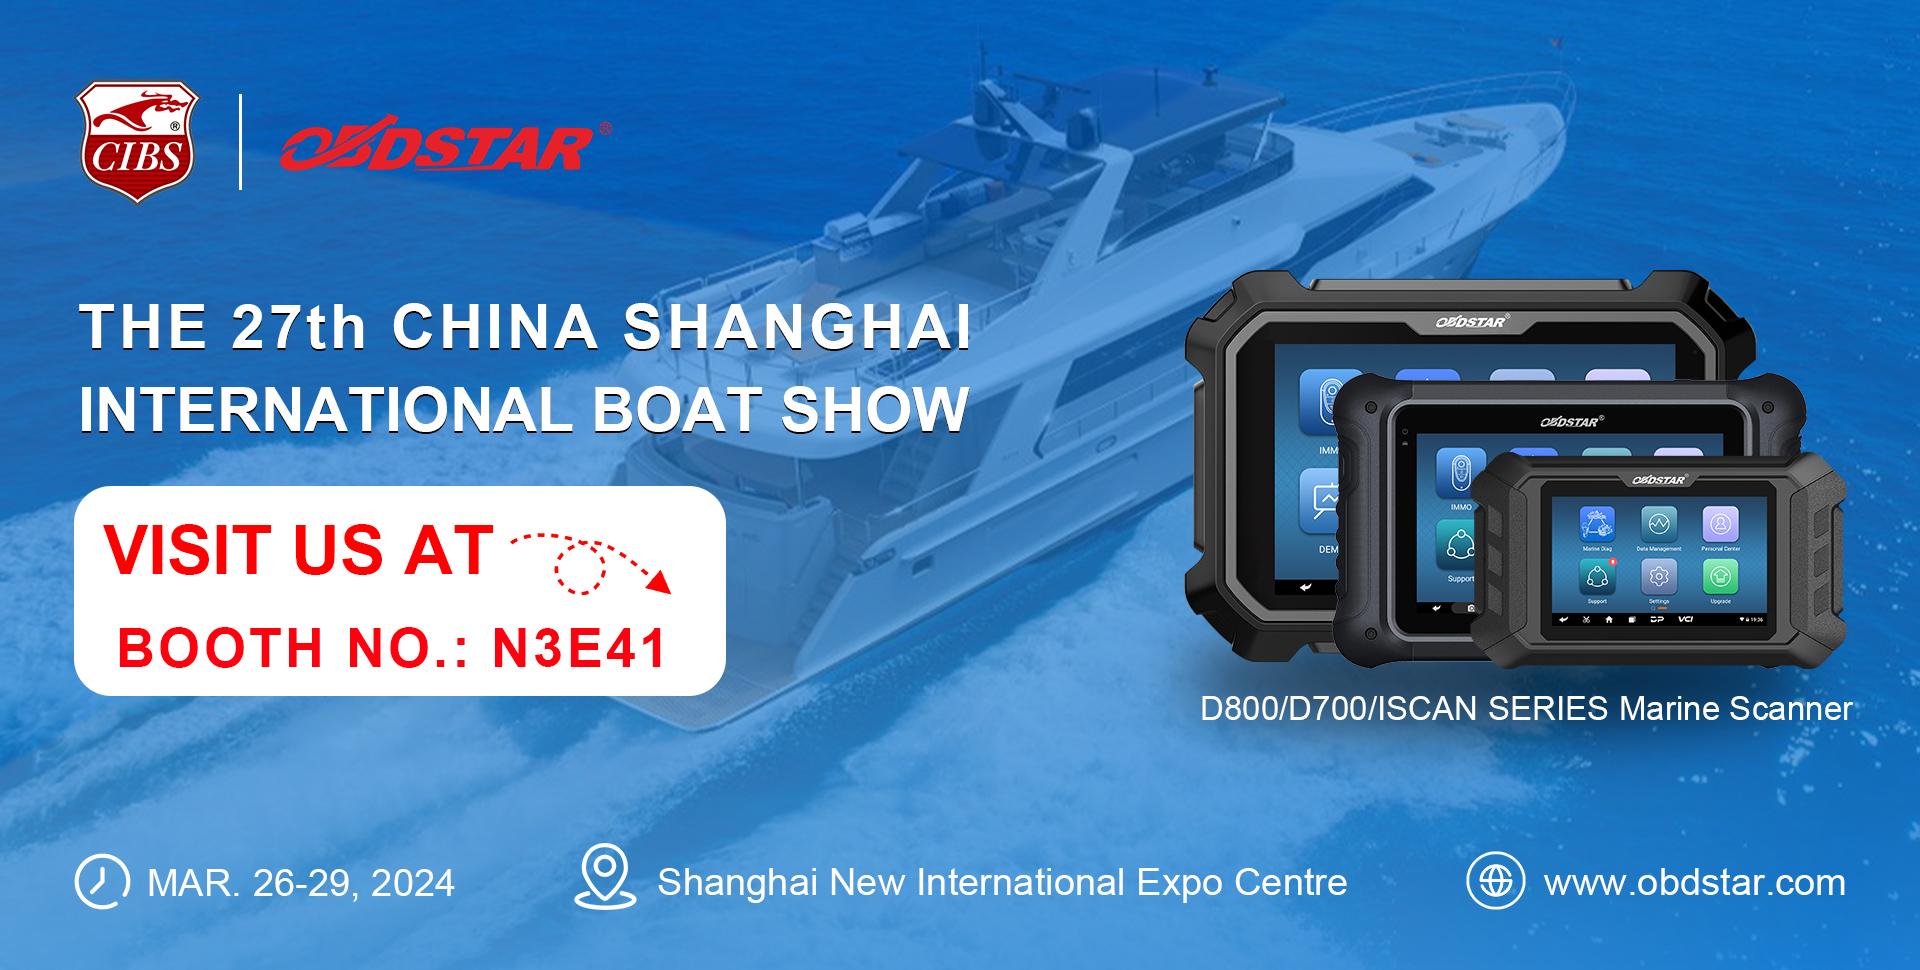 Invitation for the 27th China Shanghai International Boat Show (CIBS 2024)